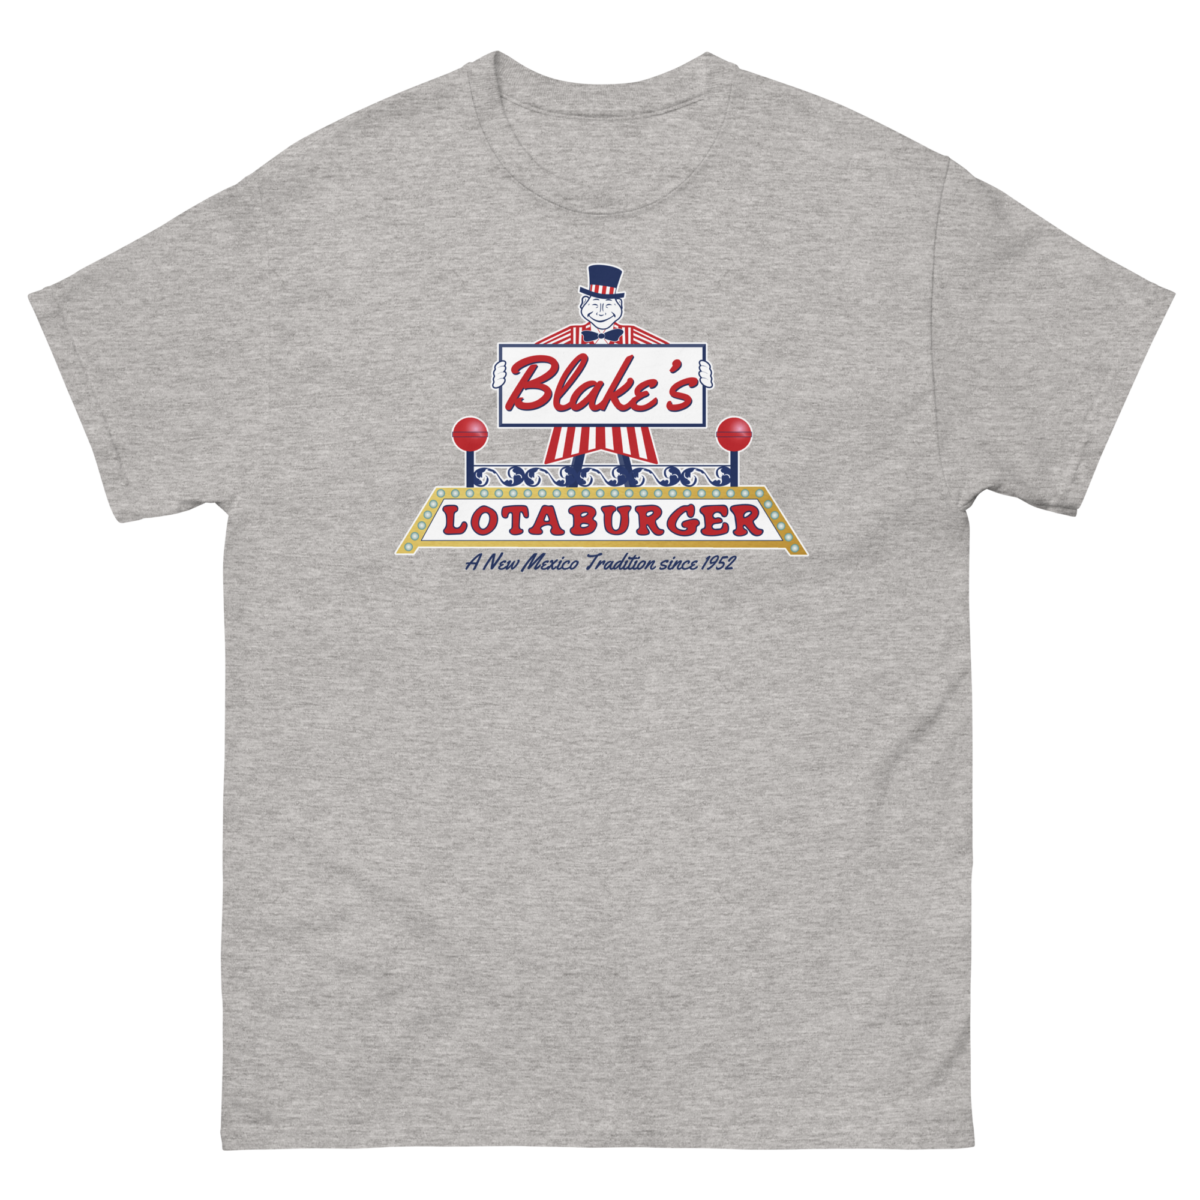 Classic Signs T-Shirt - Blake's Lotaburger